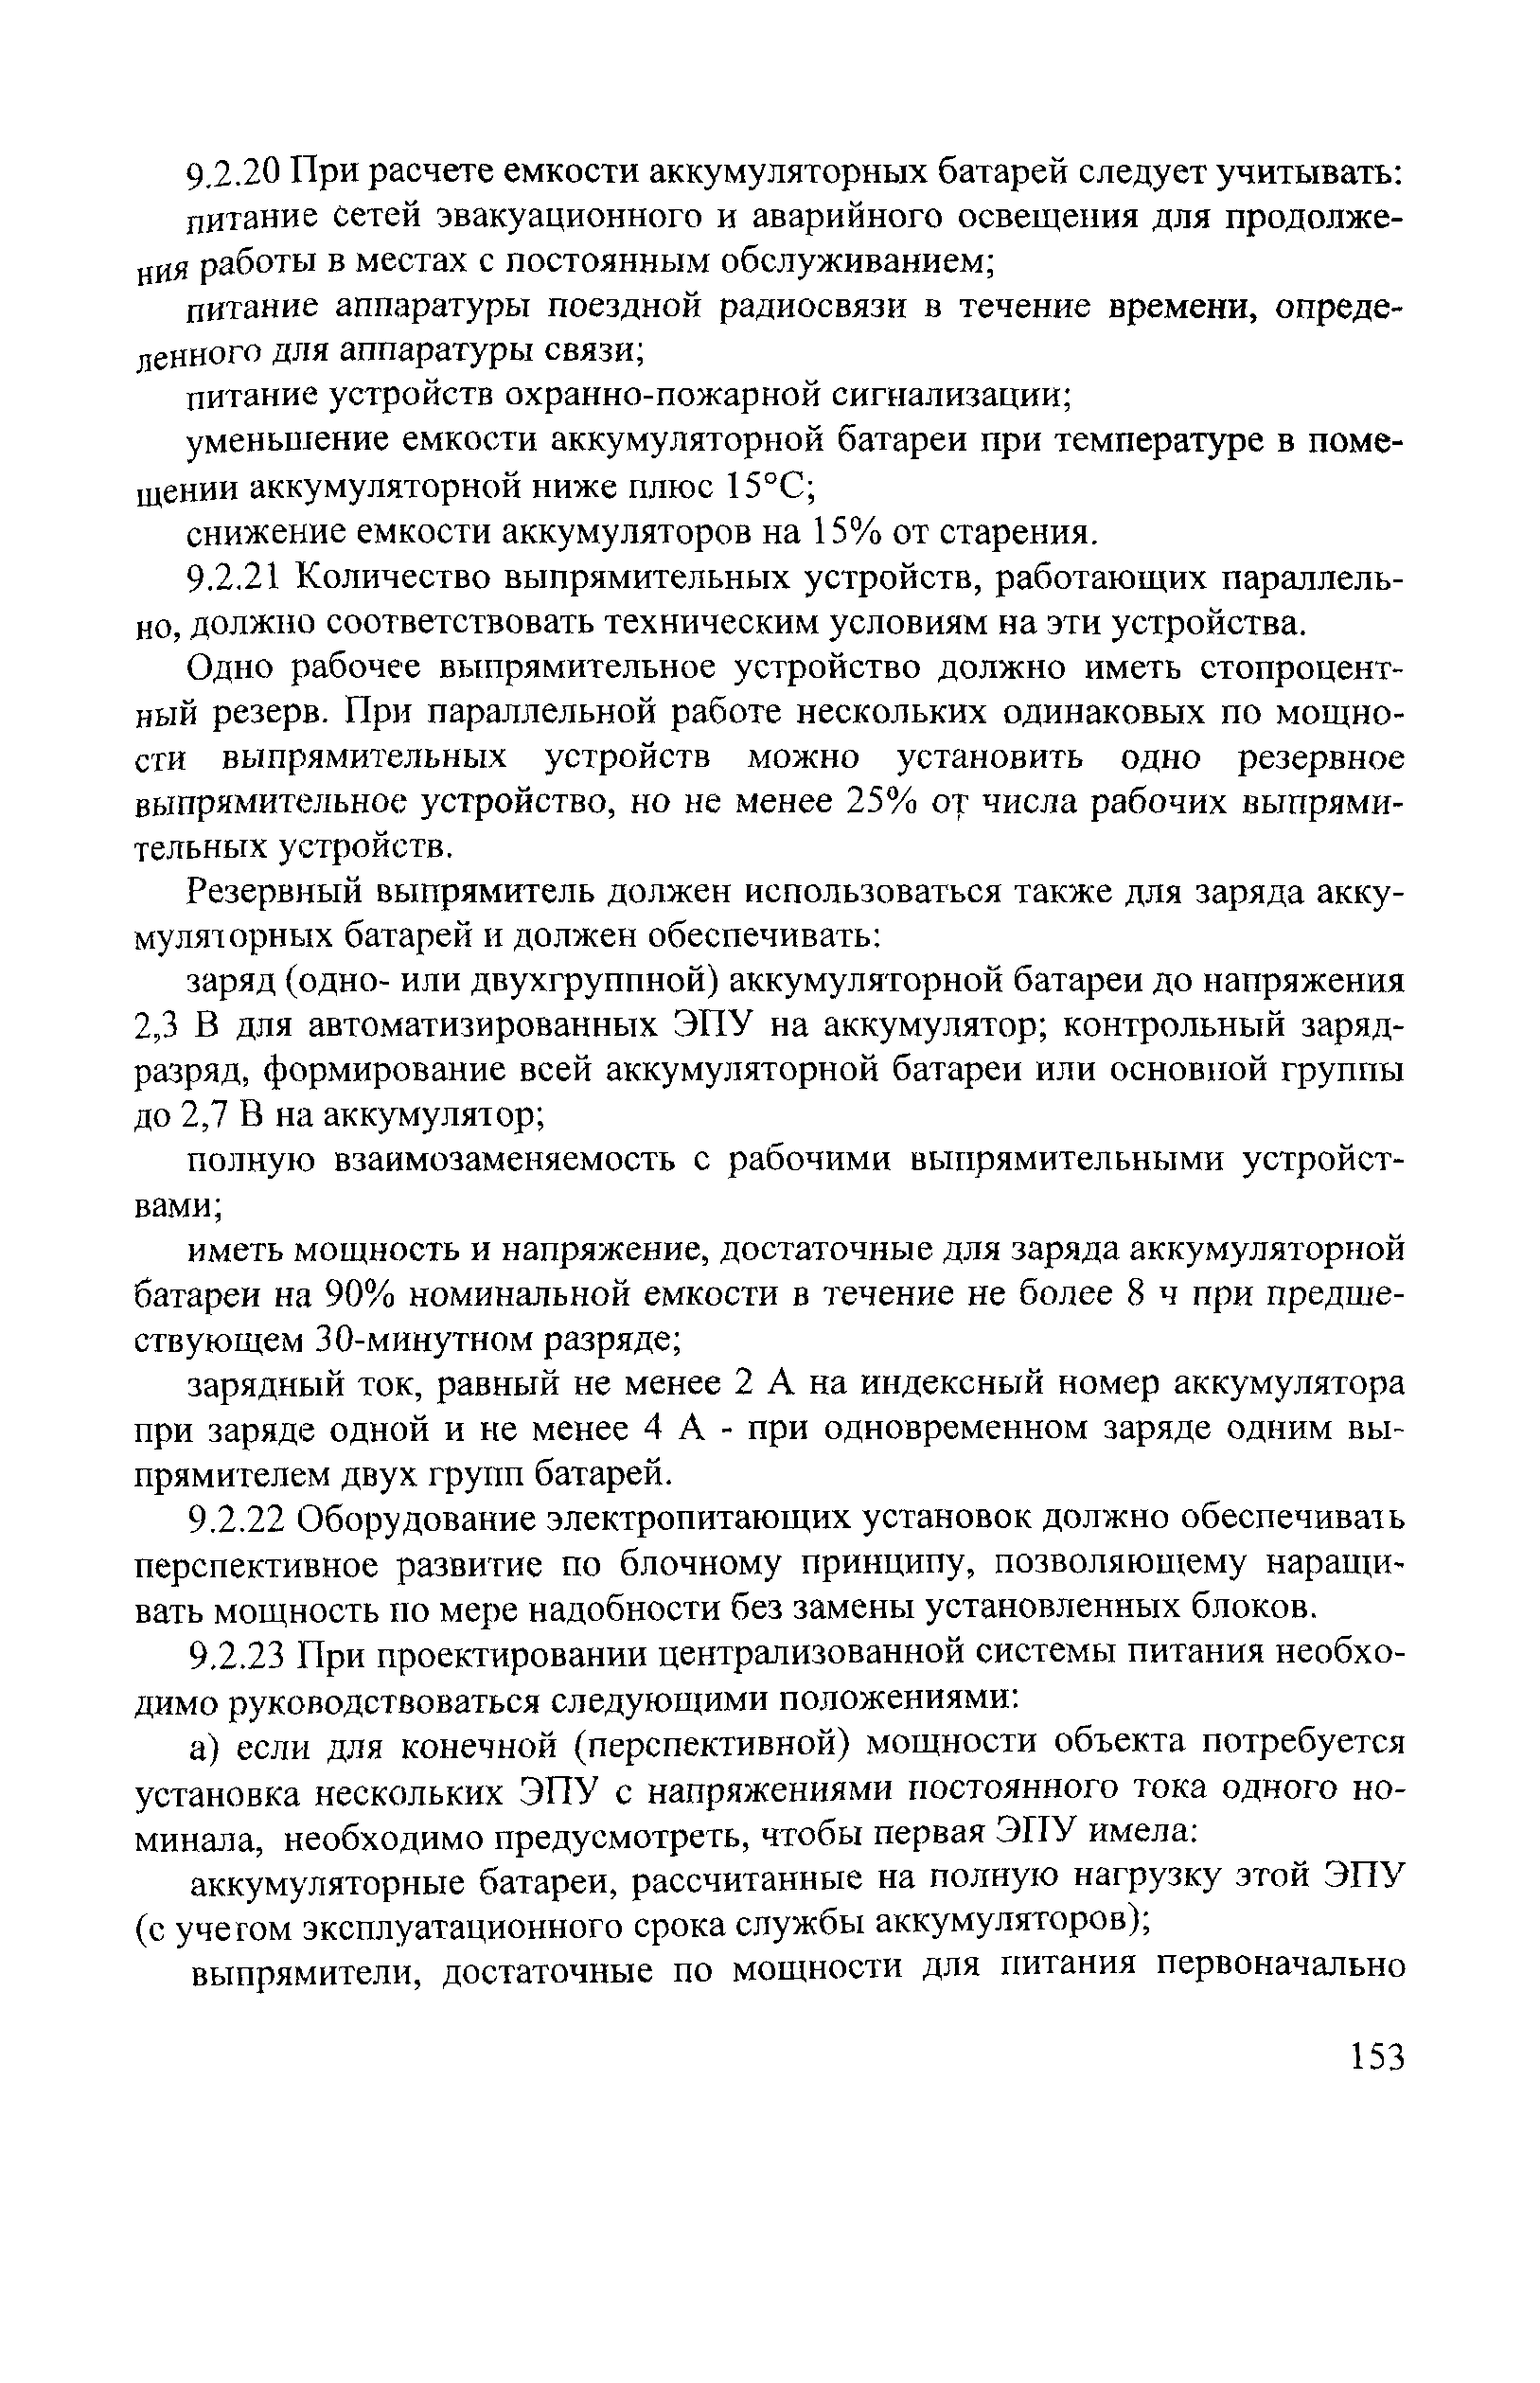 НТП ЦТКС-ФЖТ-2002